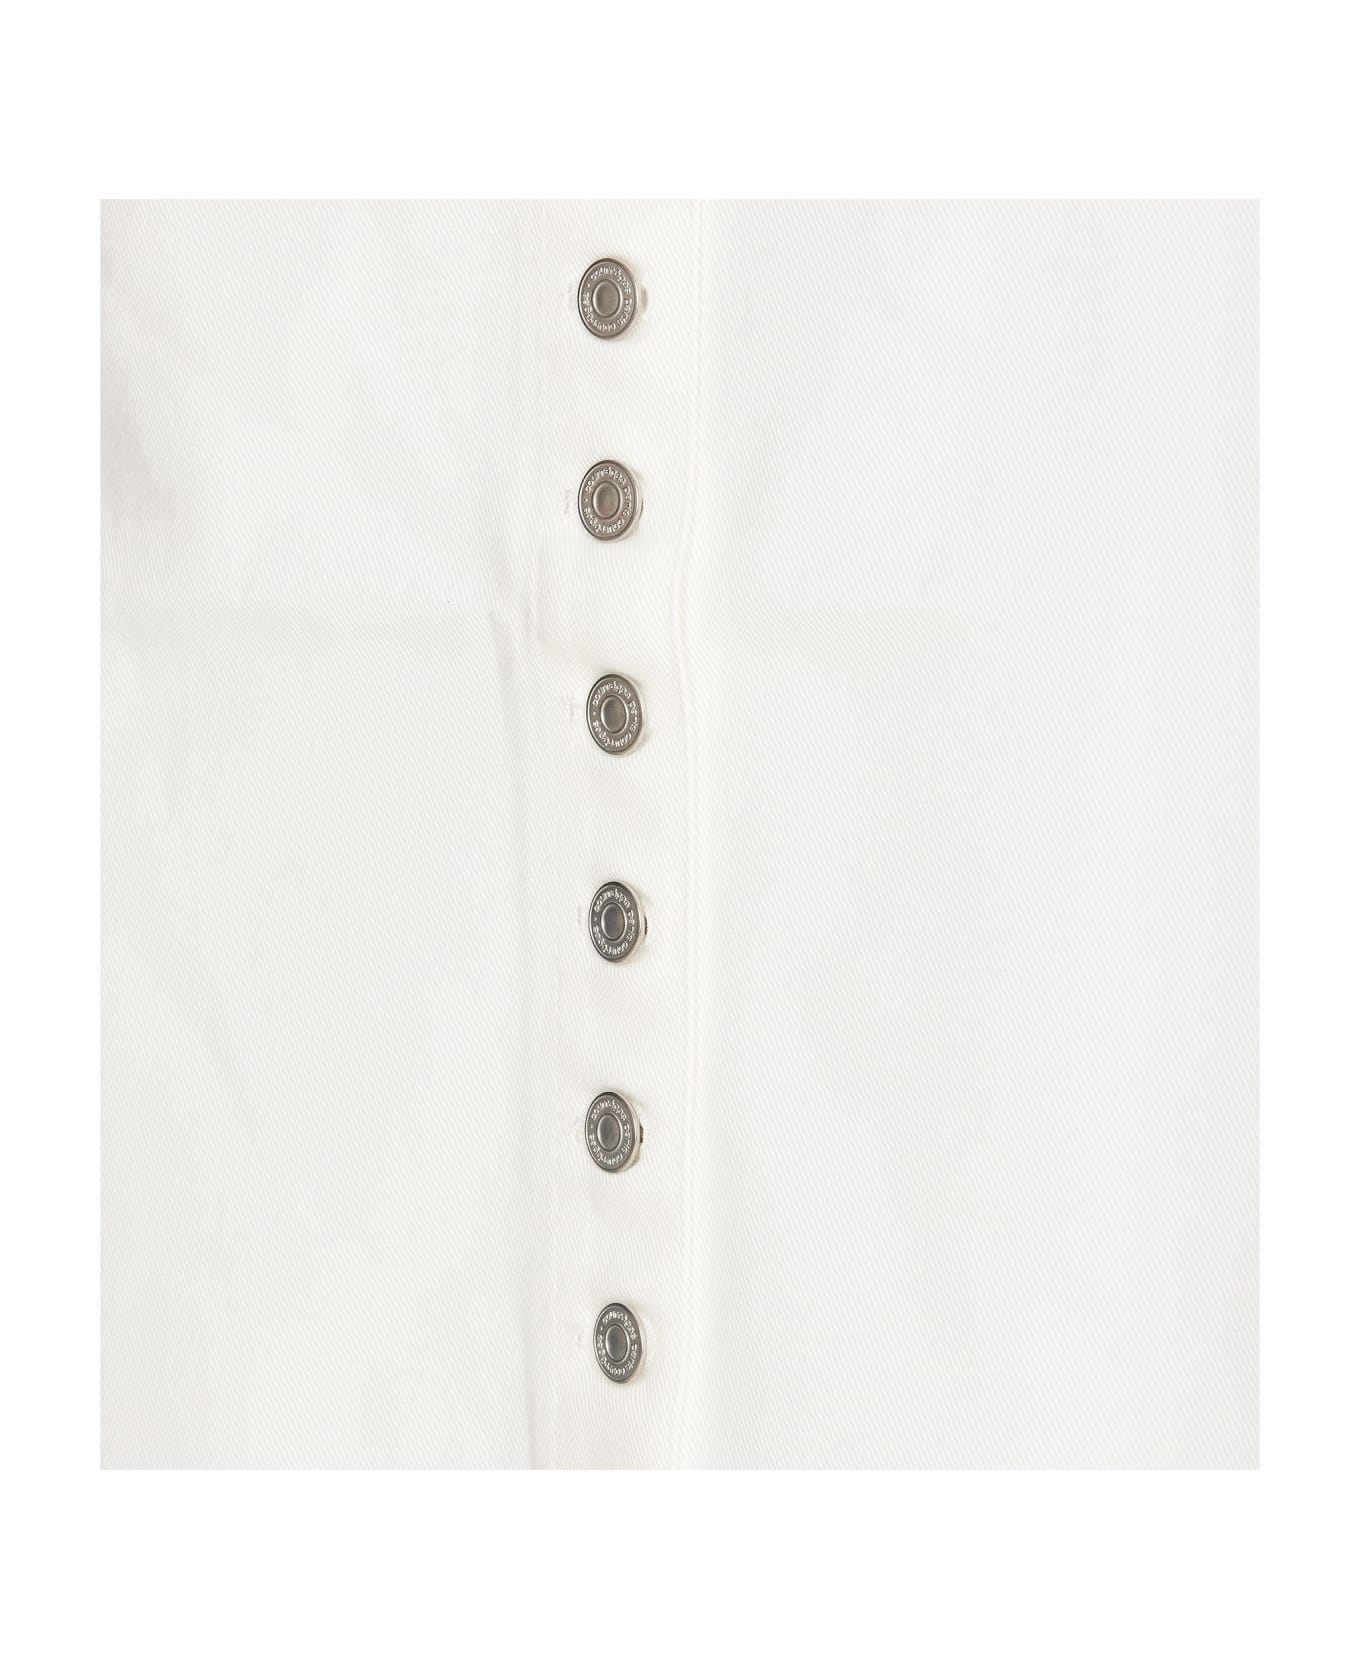 Courrèges Multiflex Denim Skirt - White スカート